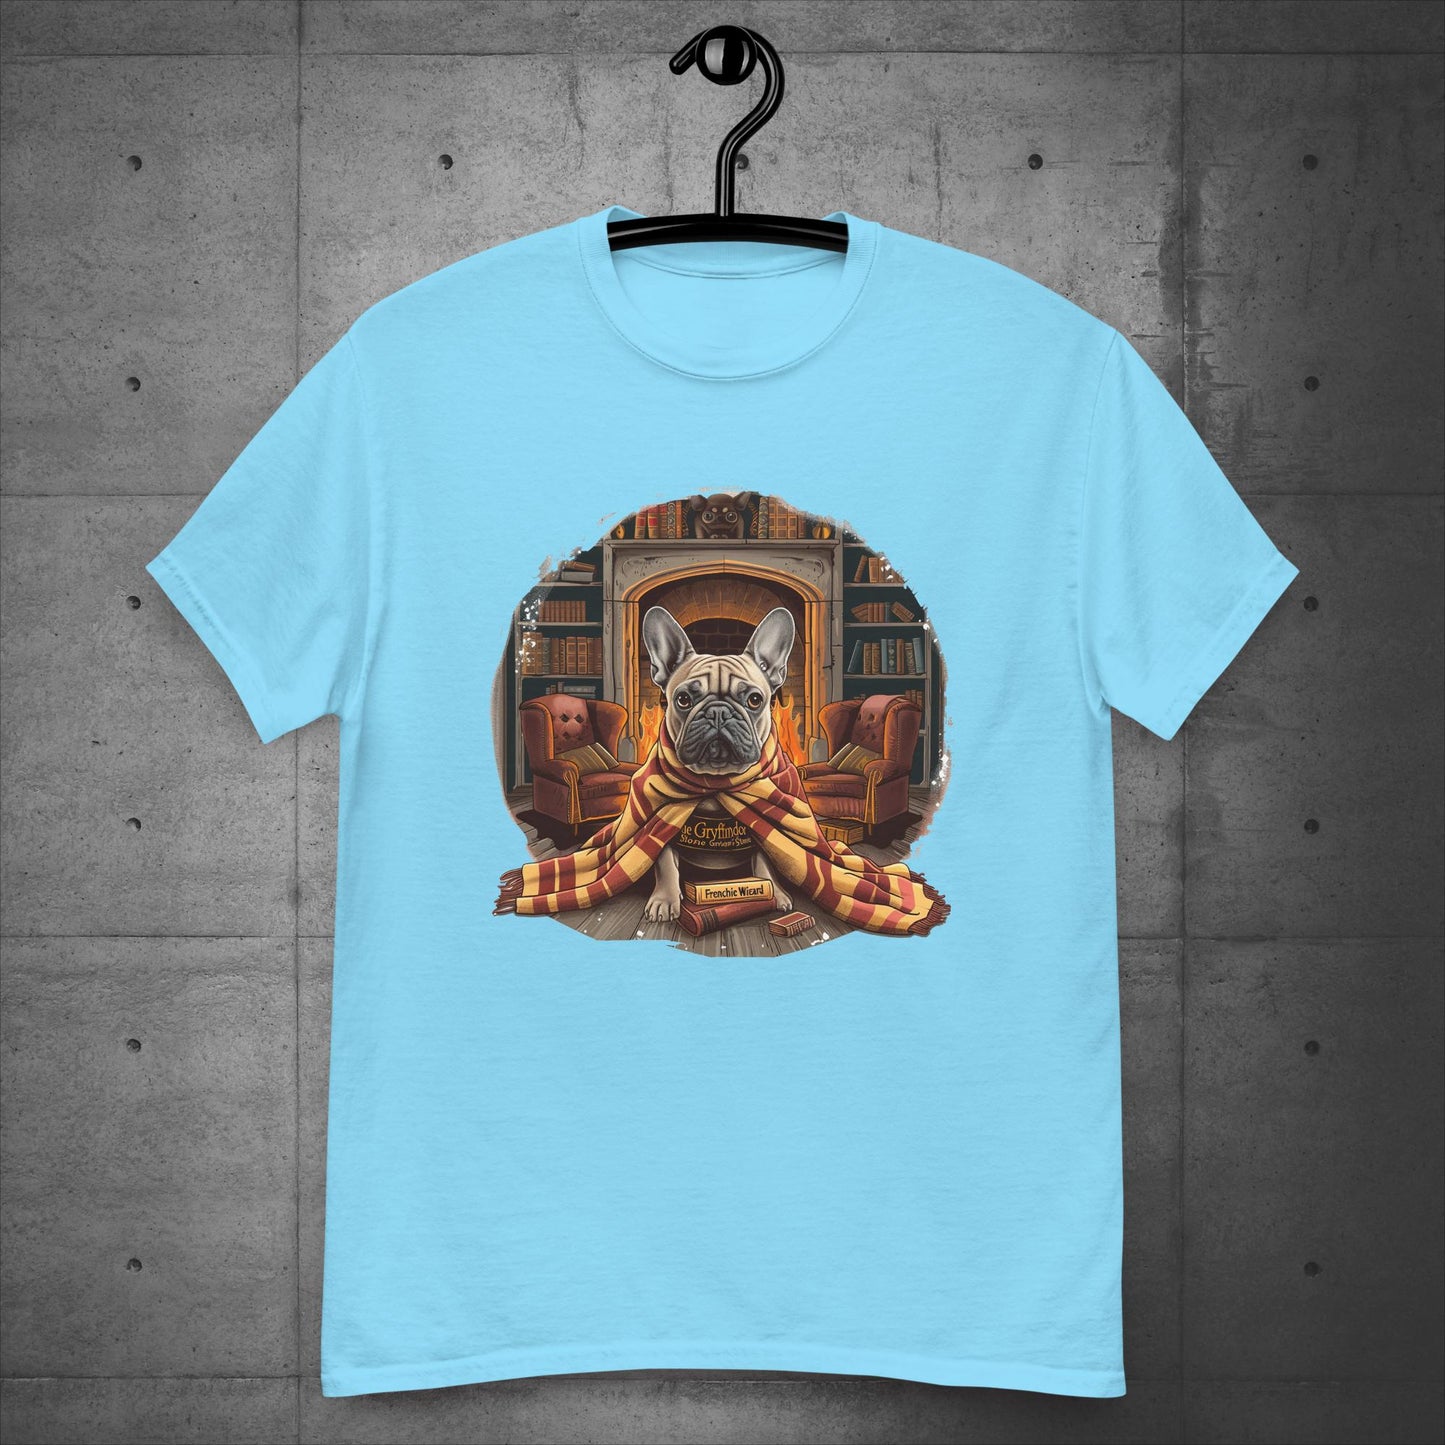 Unisex "Frenchie Wizard" T-Shirt